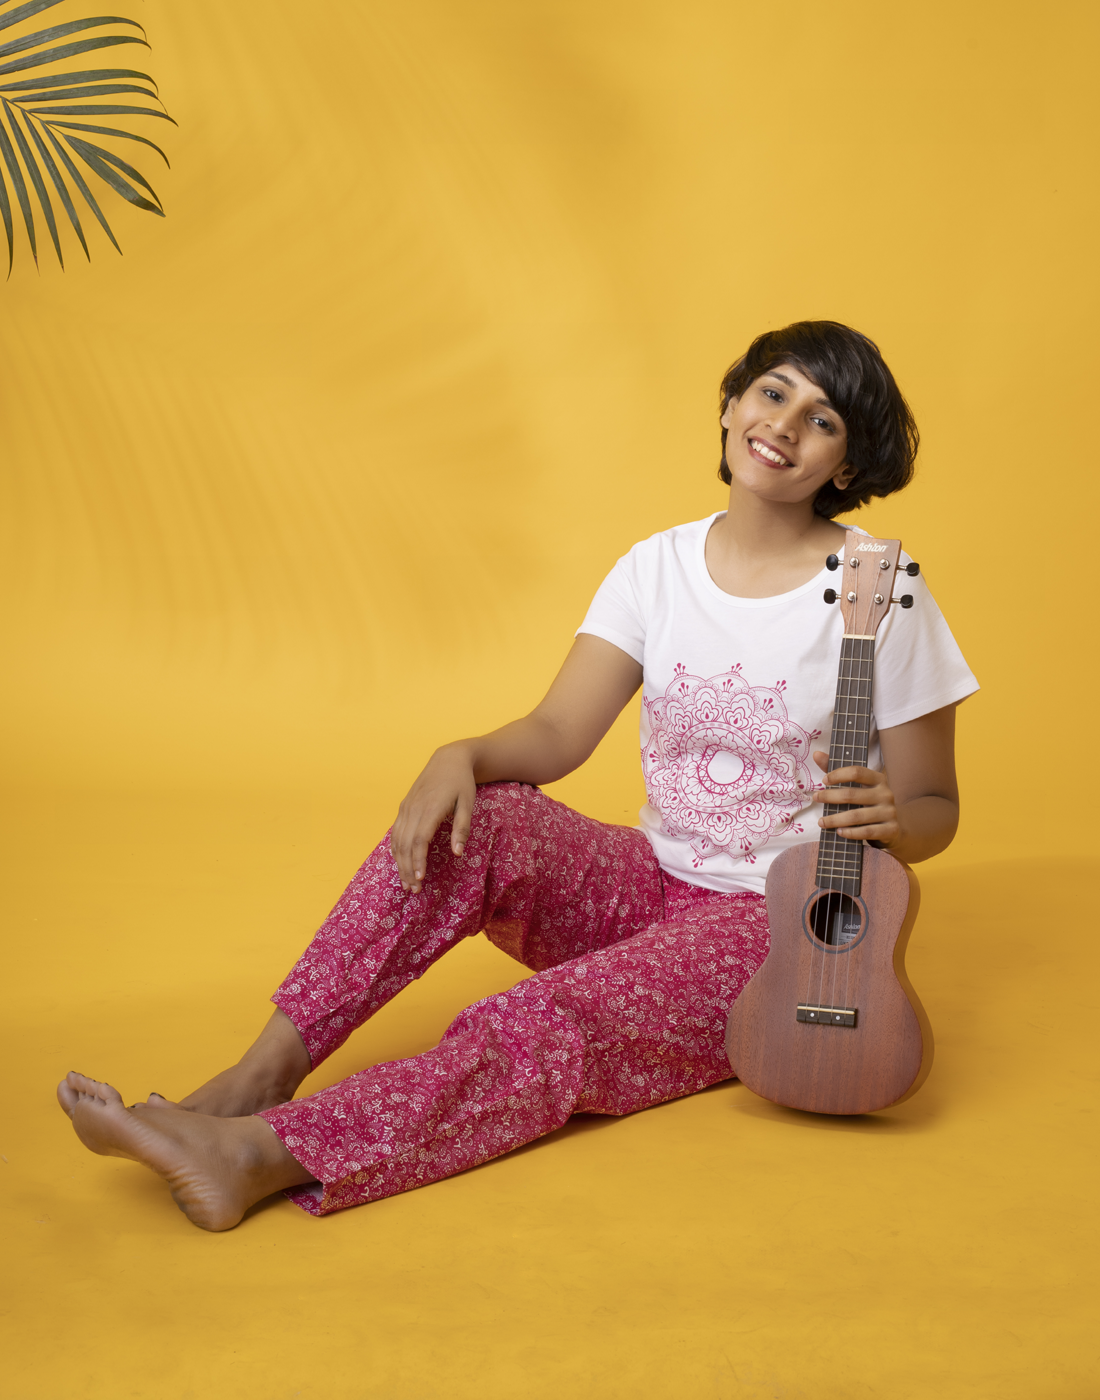 Pyjama Set for Women-Pink Rangoli Print